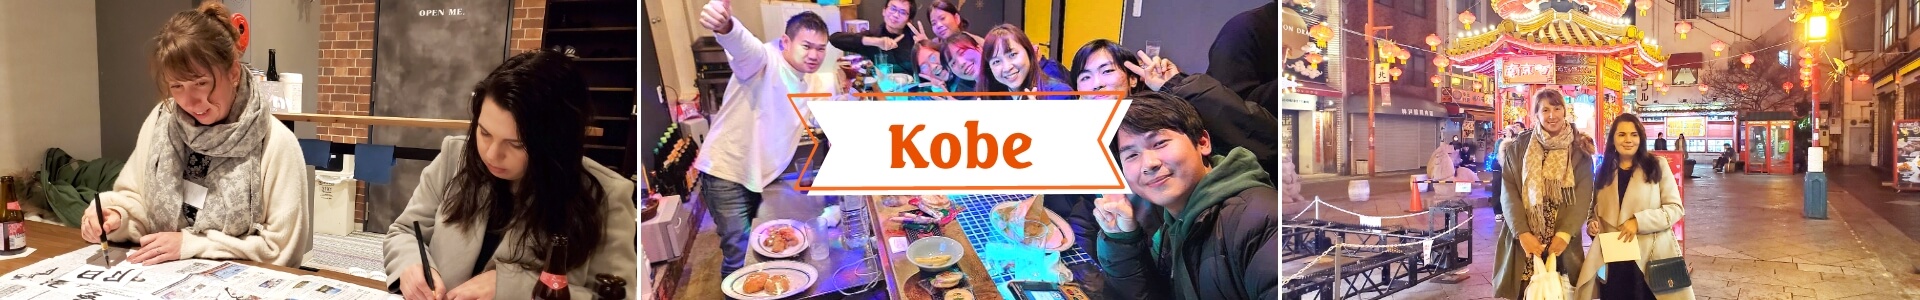 Kobe Motomachi Japanese Calligraphy Experience & Bar Hopping Tour